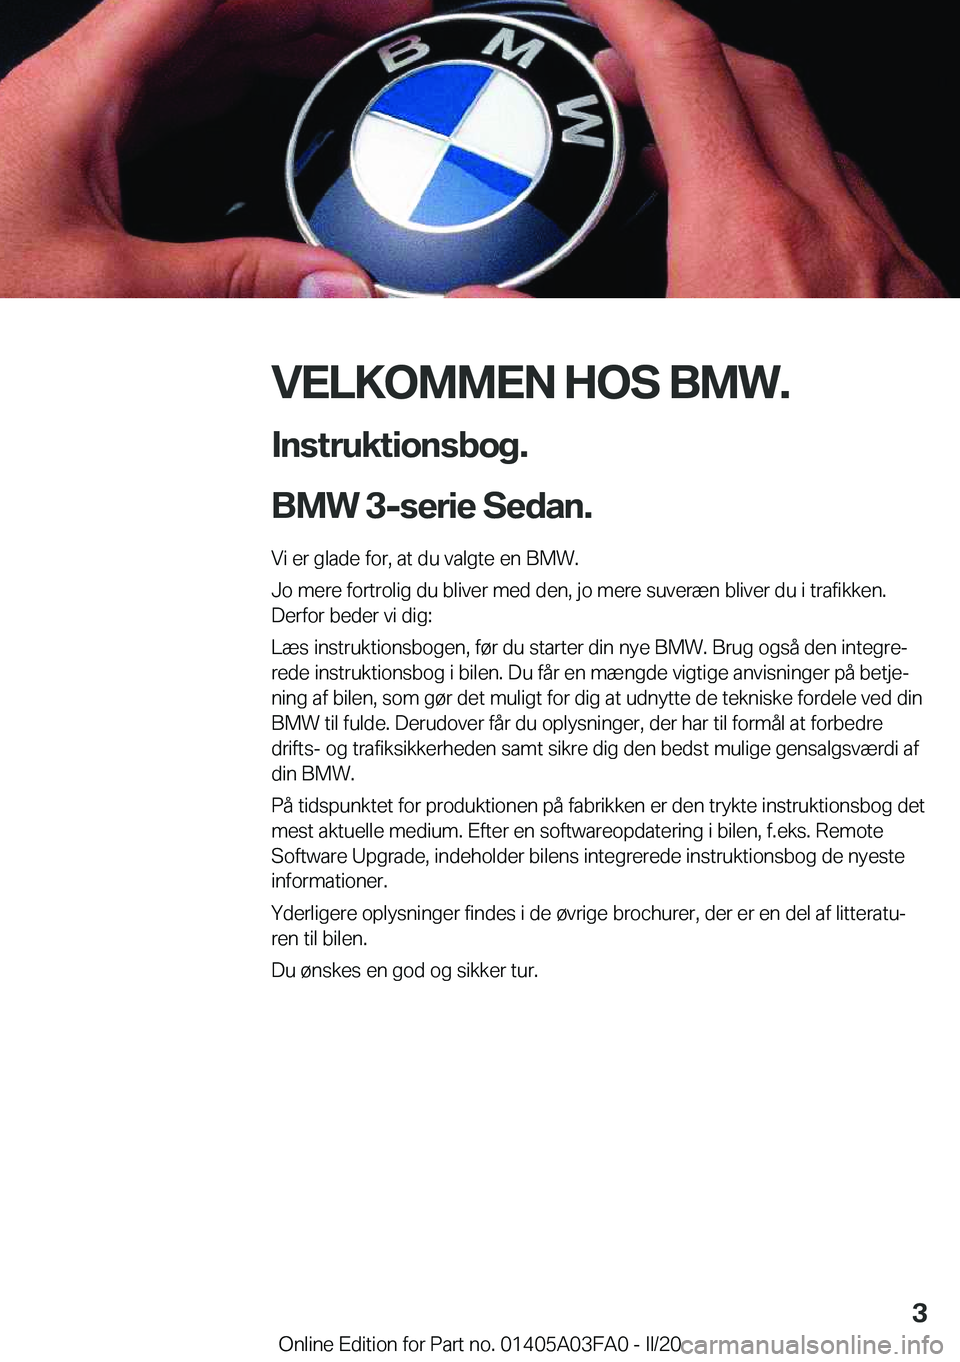 BMW 3 SERIES 2020  InstruktionsbØger (in Danish) �V�E�L�K�O�M�M�E�N��H�O�S��B�M�W�.
�I�n�s�t�r�u�k�t�i�o�n�s�b�o�g�.
�B�M�W��3�-�s�e�r�i�e��S�e�d�a�n�. �V�i��e�r��g�l�a�d�e��f�o�r�,��a�t��d�u��v�a�l�g�t�e��e�n��B�M�W�.�J�o��m�e�r�e��f�